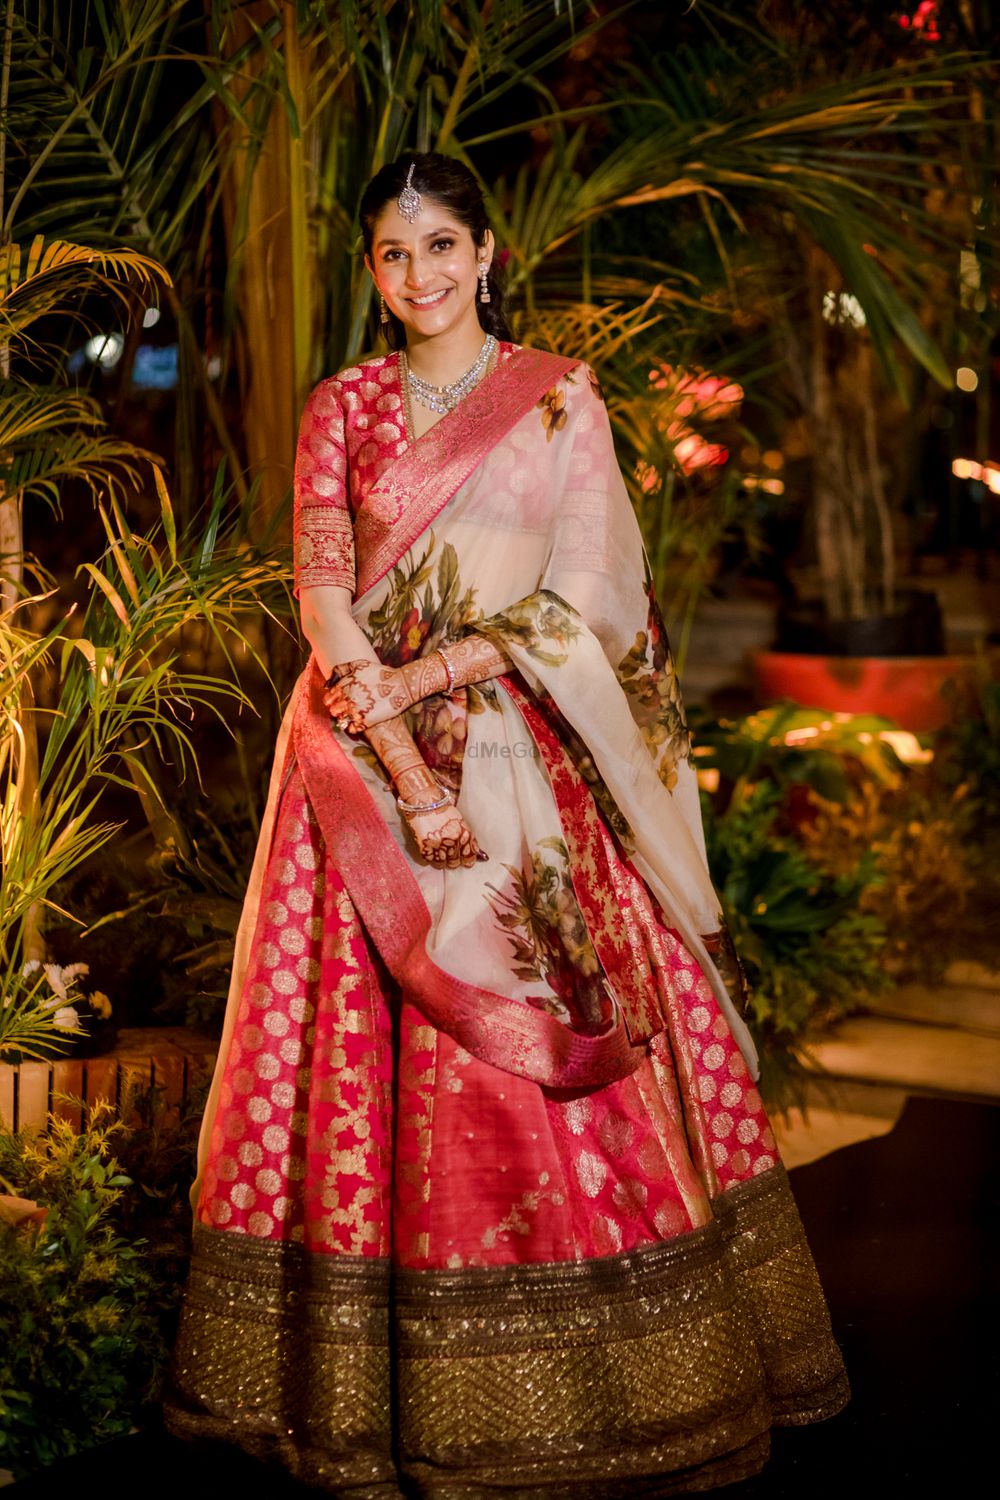 Photo of Bride wearing a banarsi lehenga with a printed dupatta.